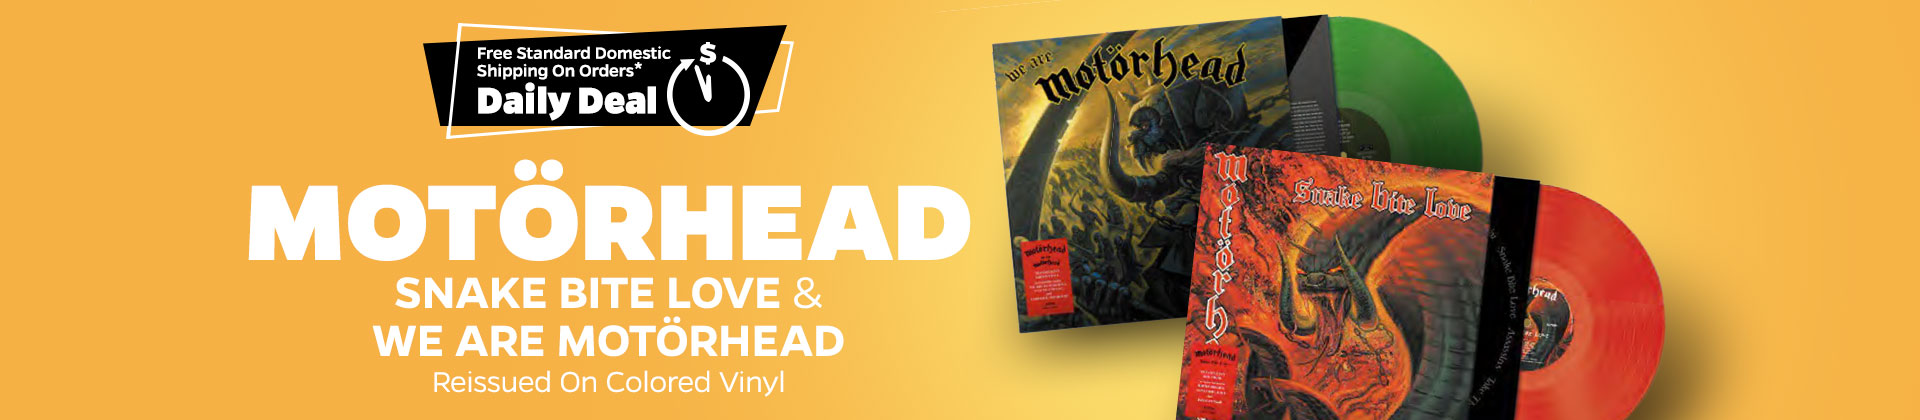 Motorhead Vinyl Reissues 